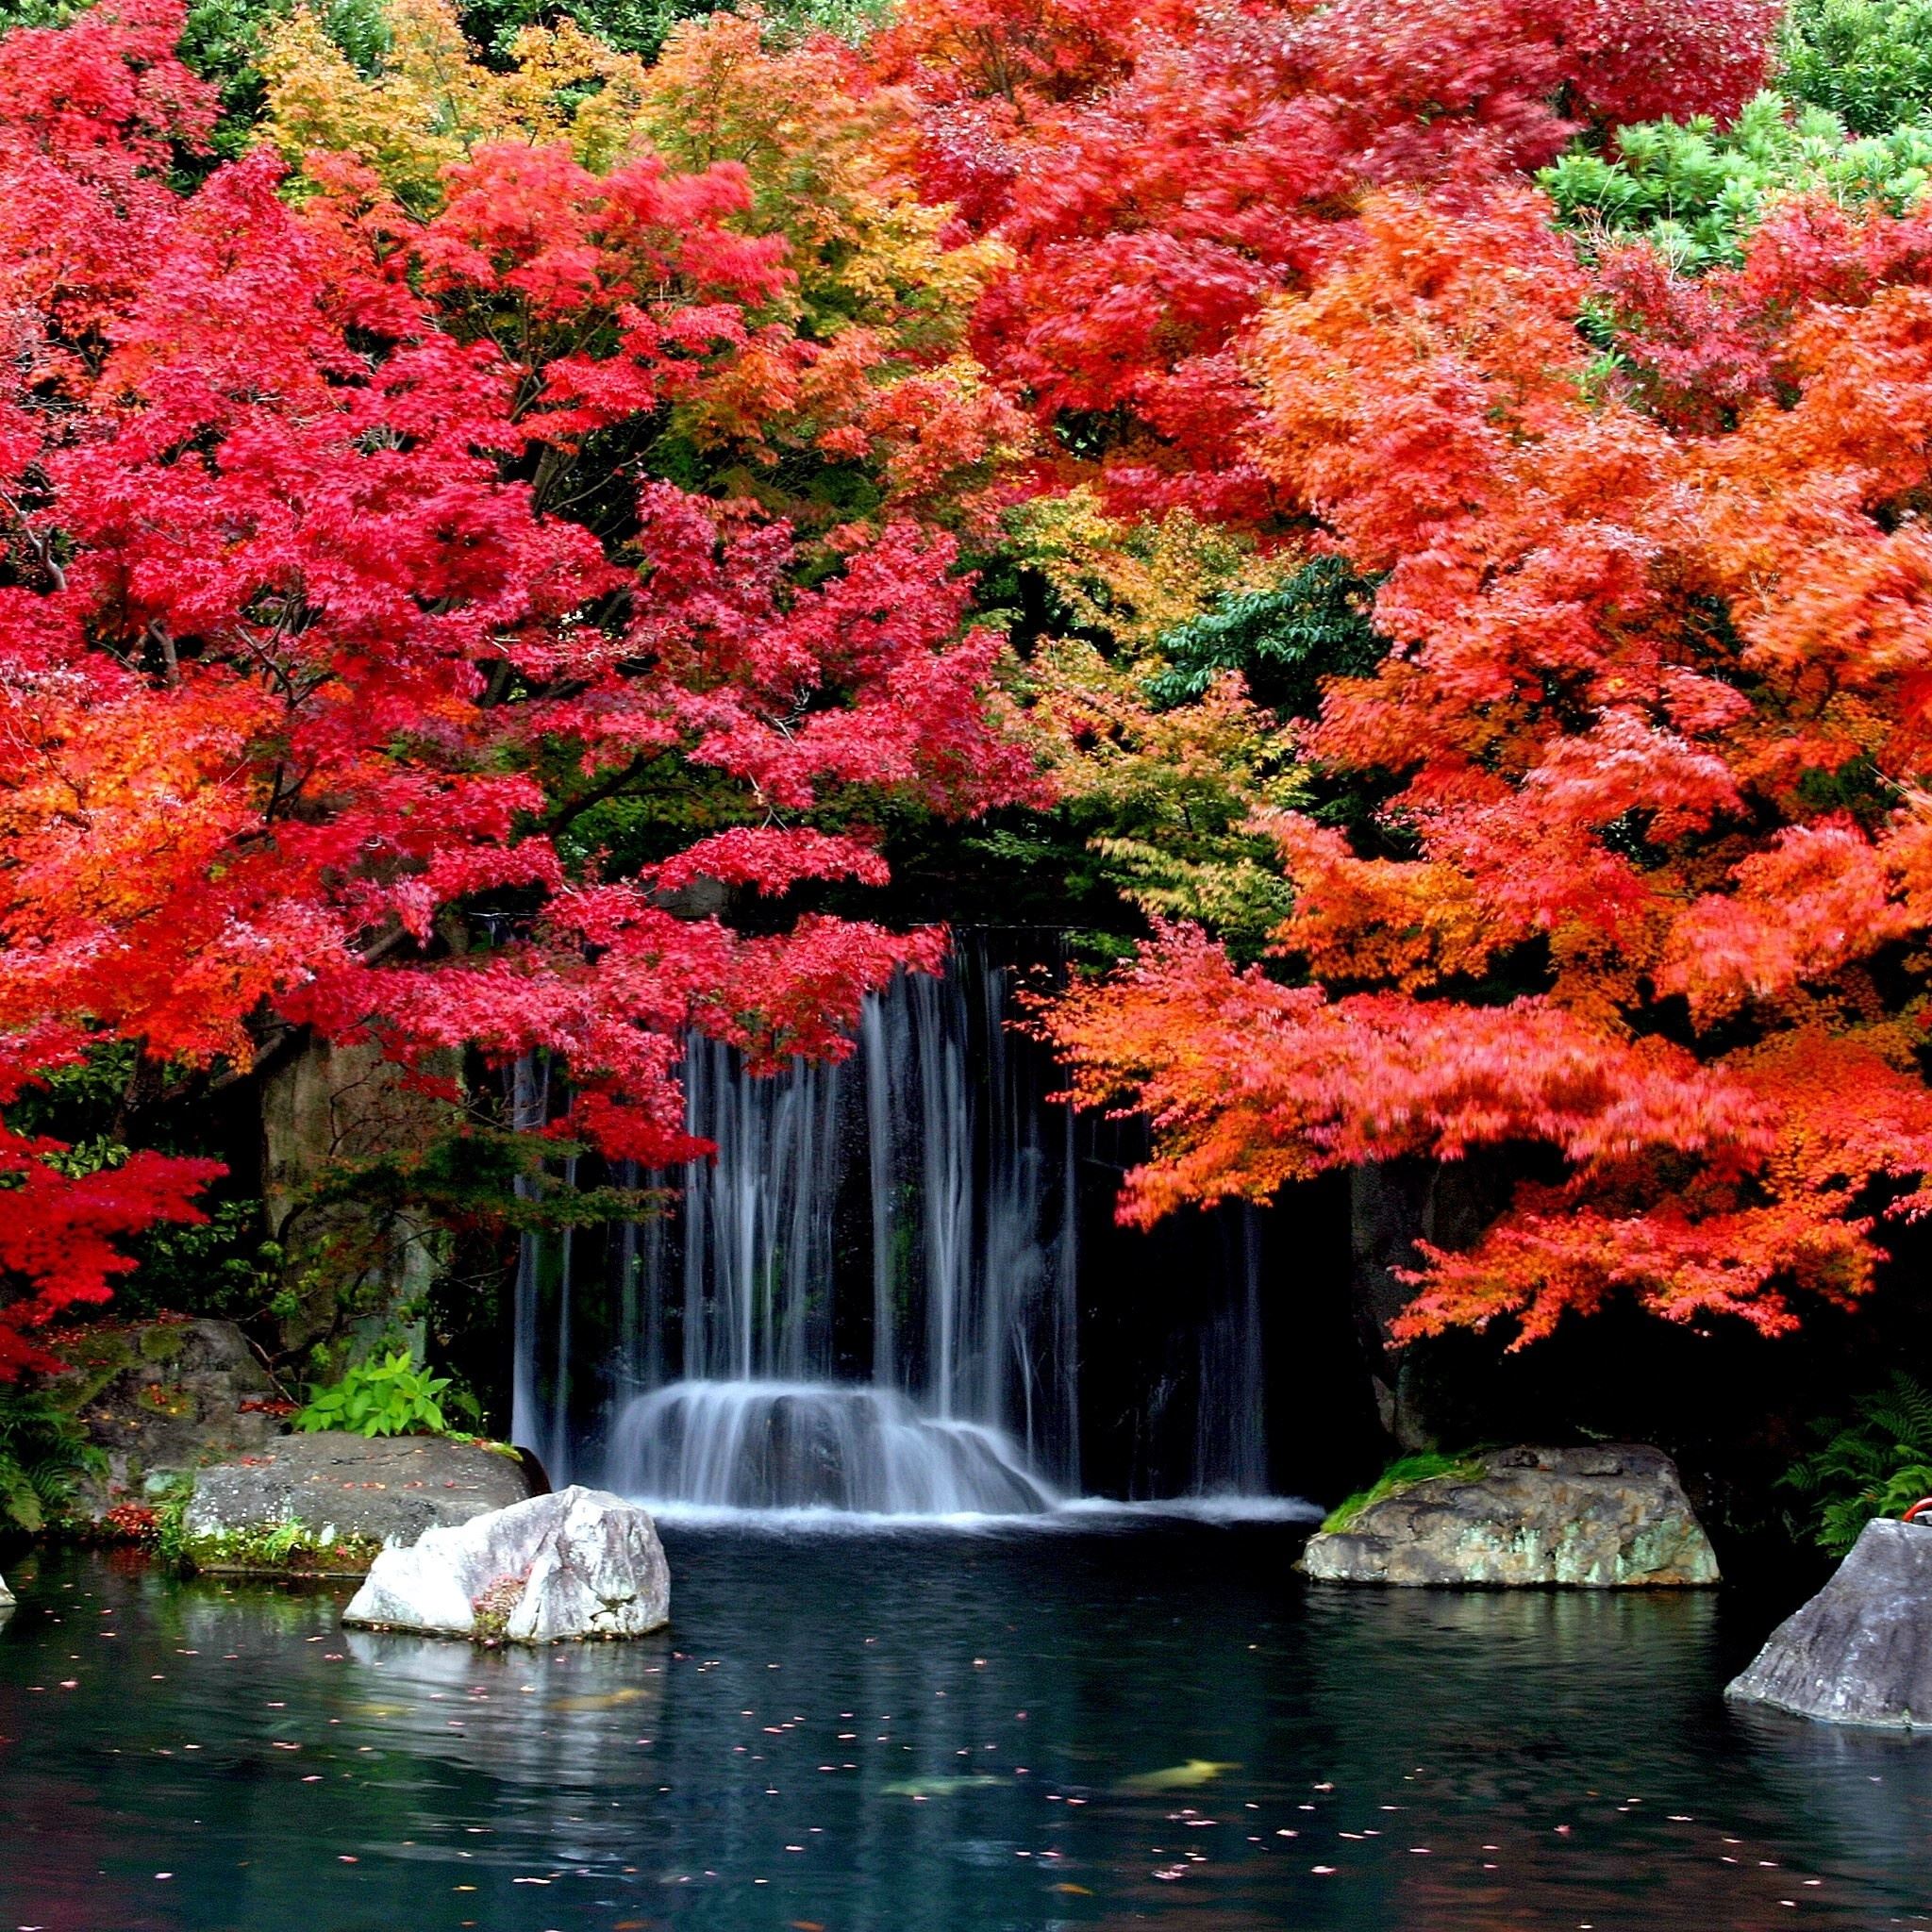 Cool Autumn Waterfall Ipad Air Wallpaper Download Iphone.